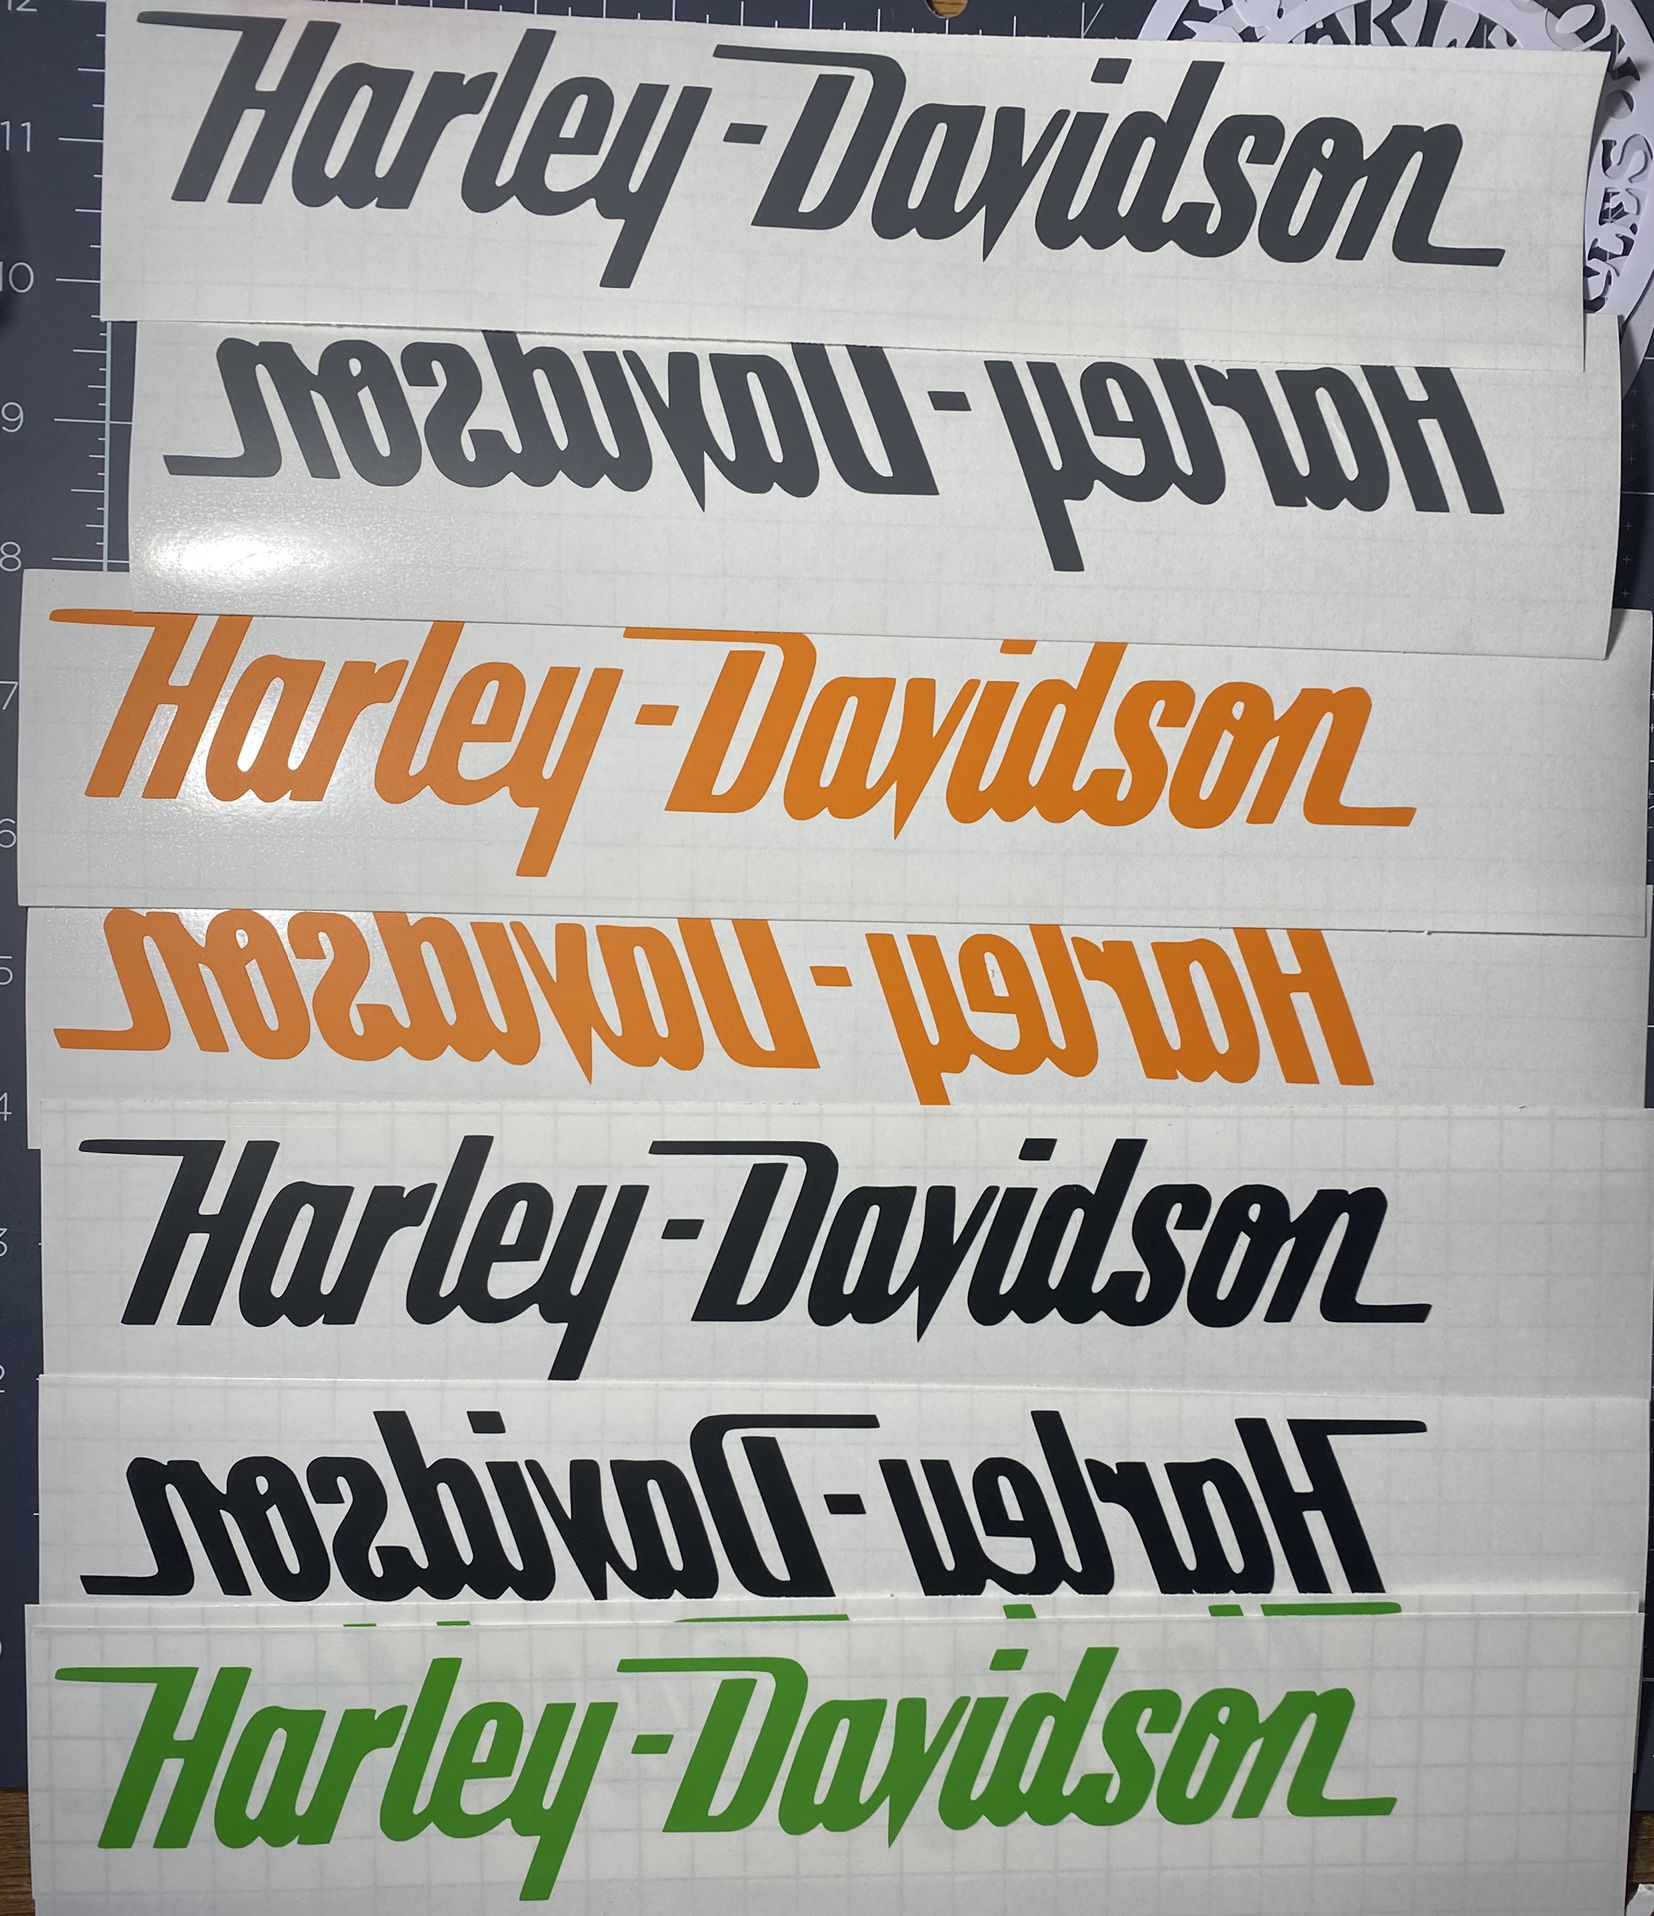 Harley Davidson Set Of 2 Vinyl Decals 